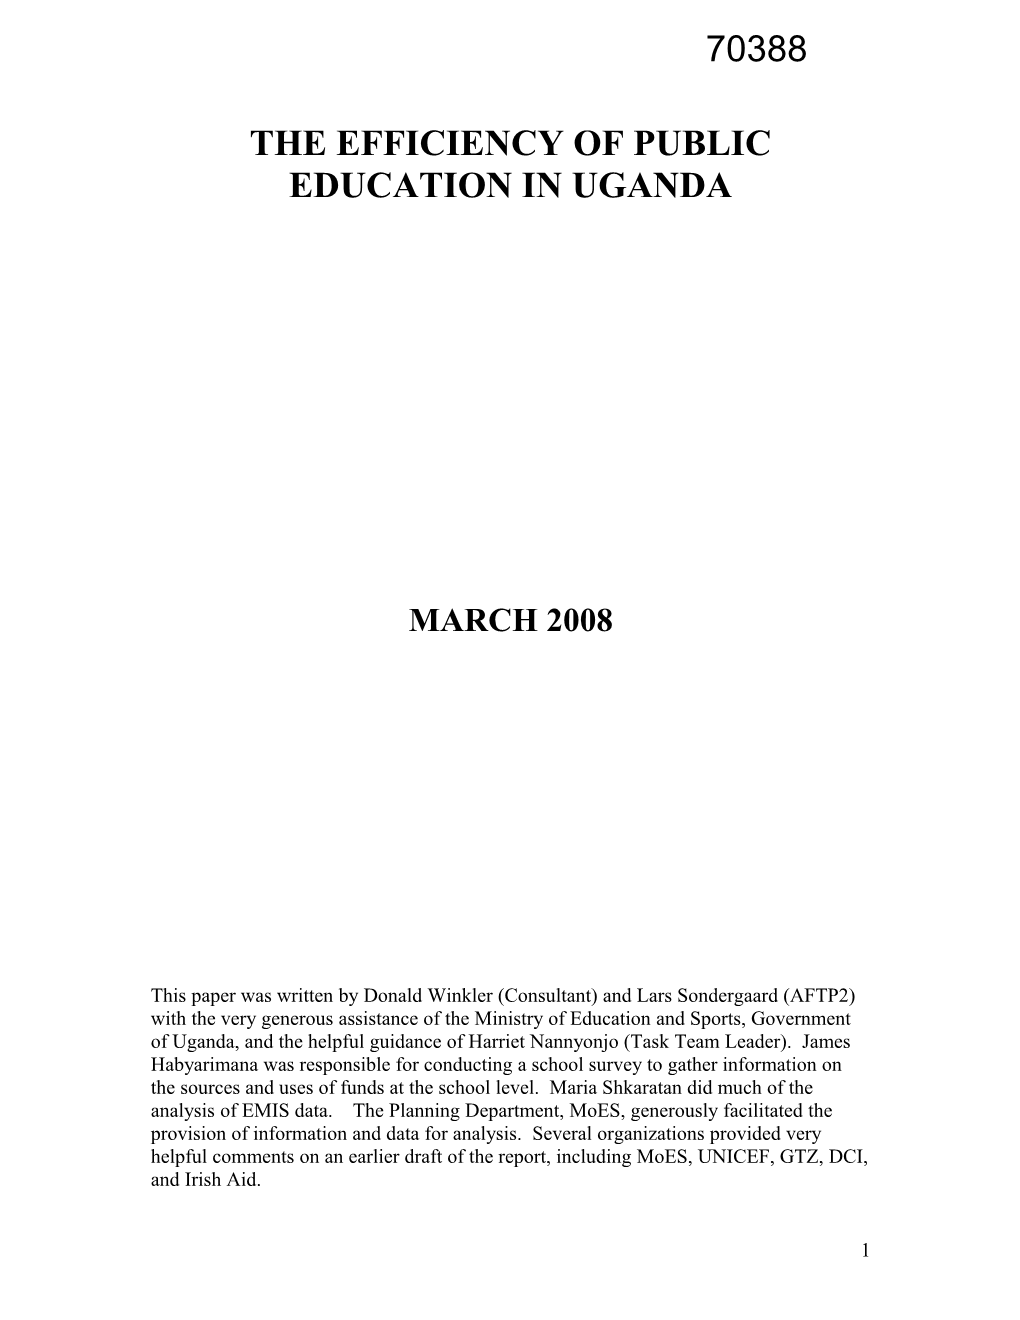 The Efficiency of Public Education in Uganda